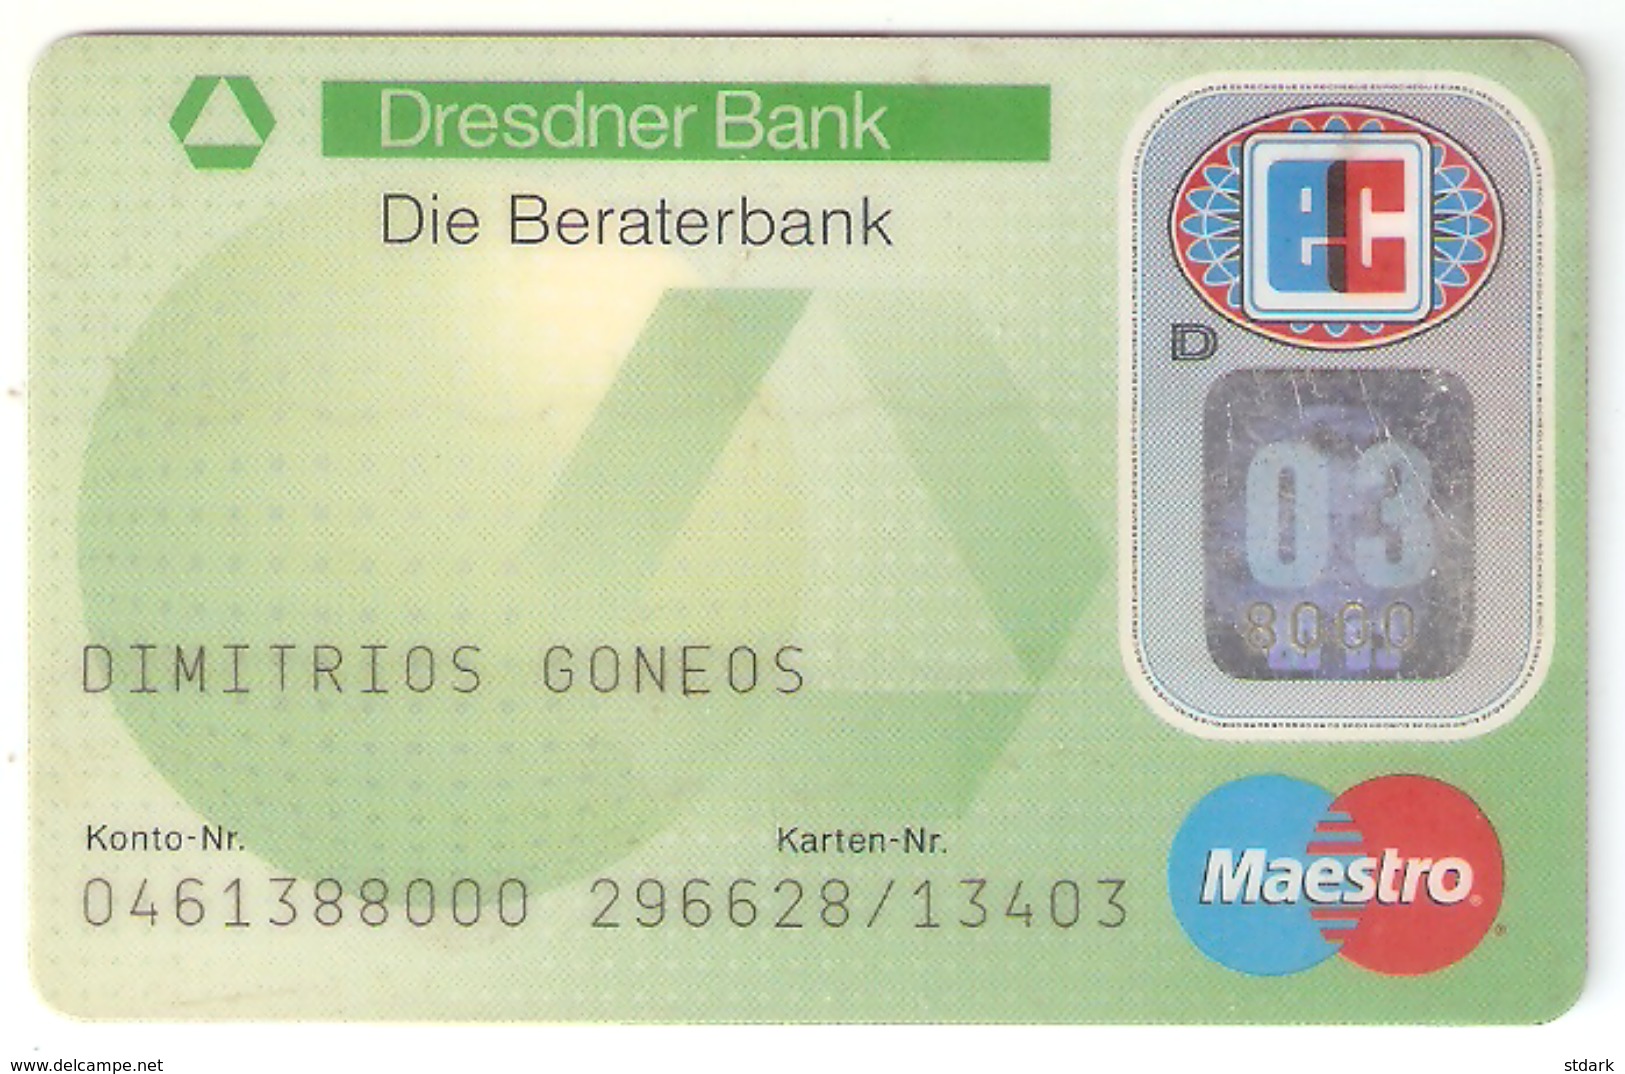 Dresdner Bank Card - Cartes De Crédit (expiration Min. 10 Ans)